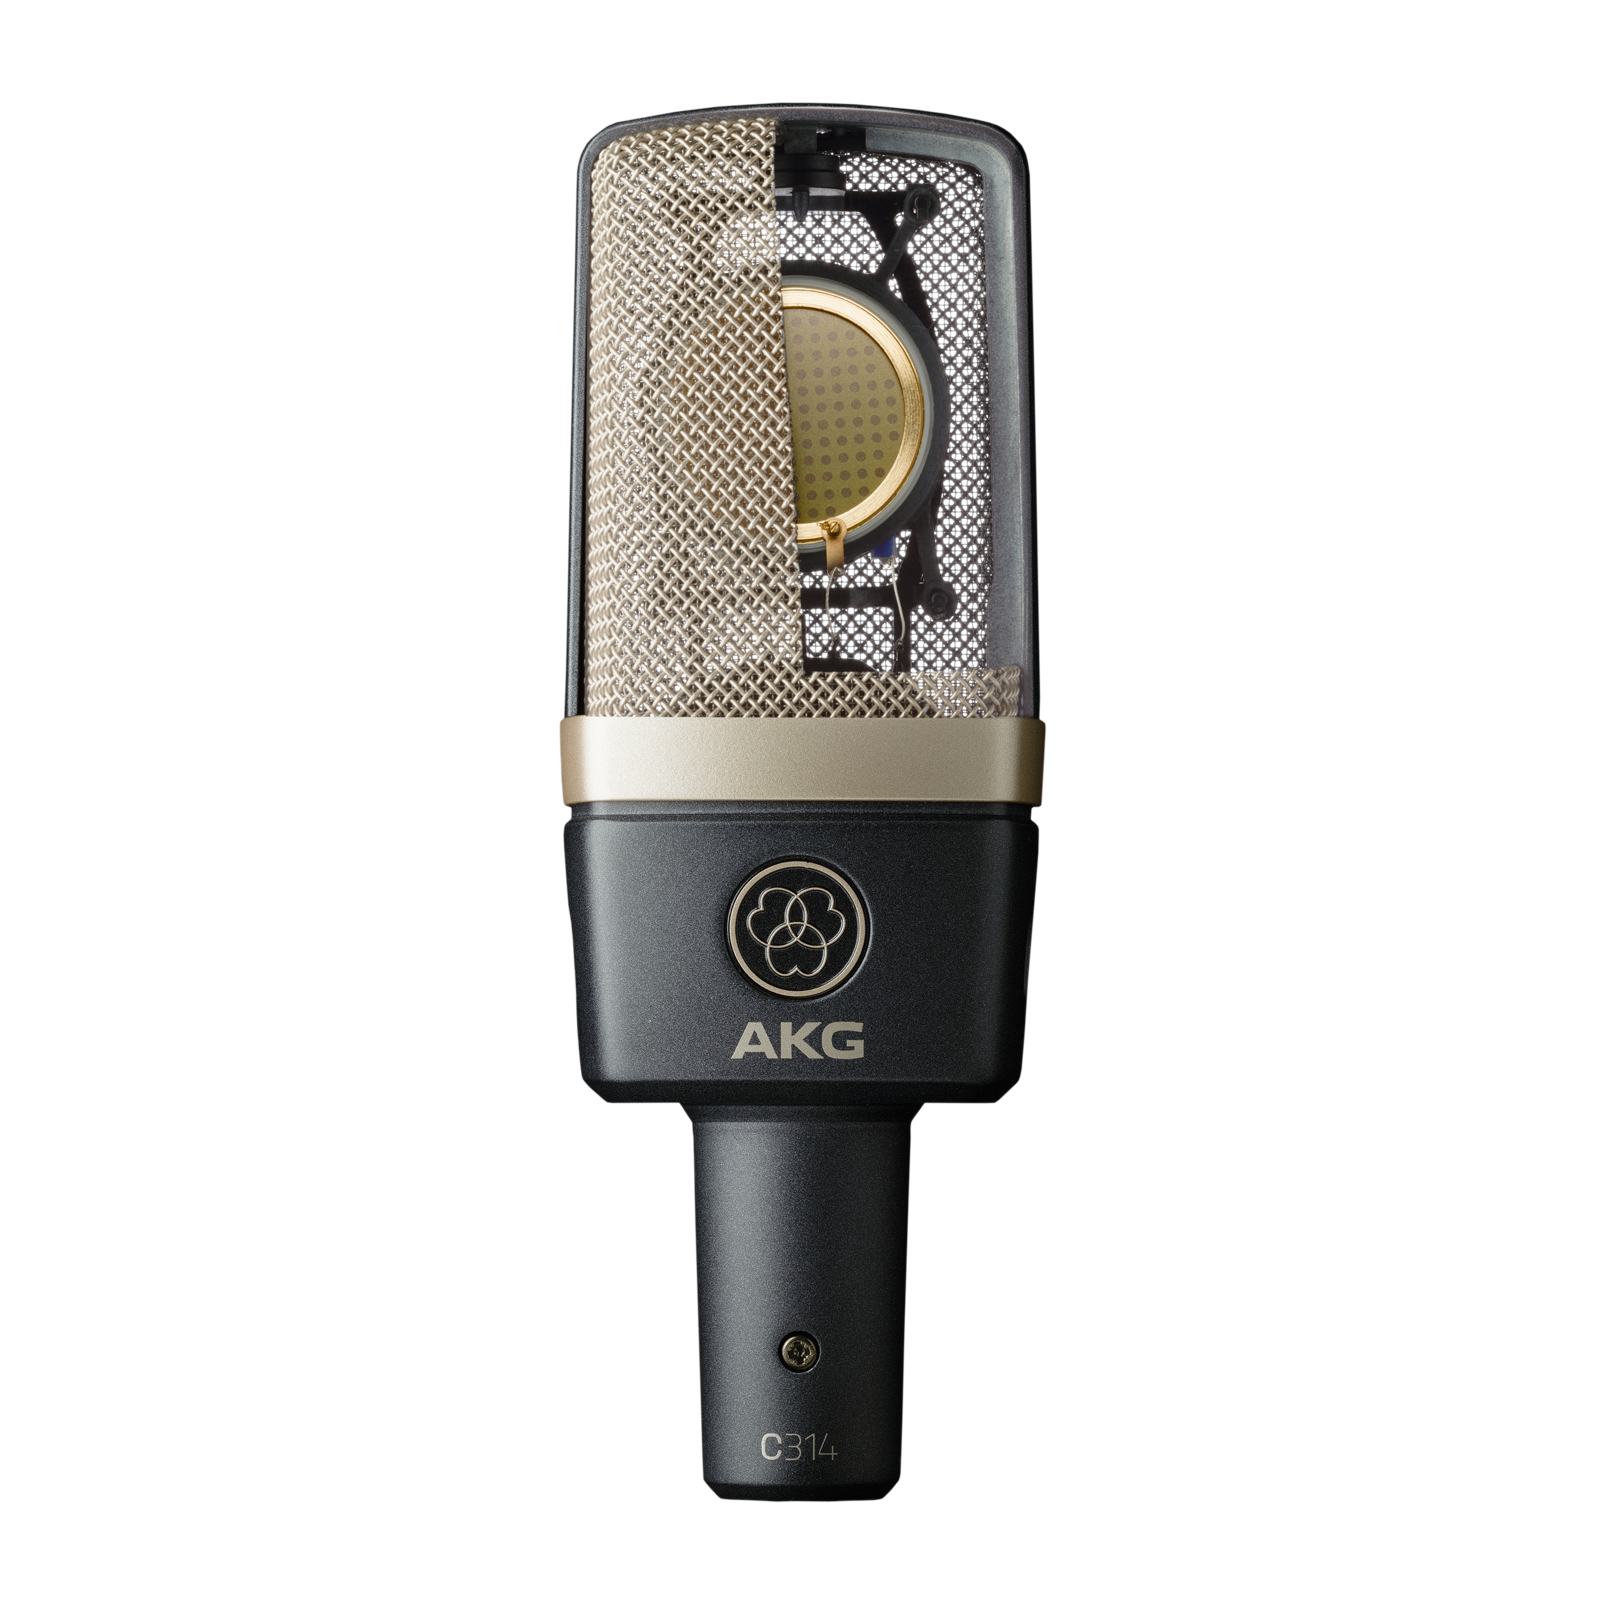 C314 (B-Stock) - Black - Professional multi-pattern condenser microphone - Detailshot 1